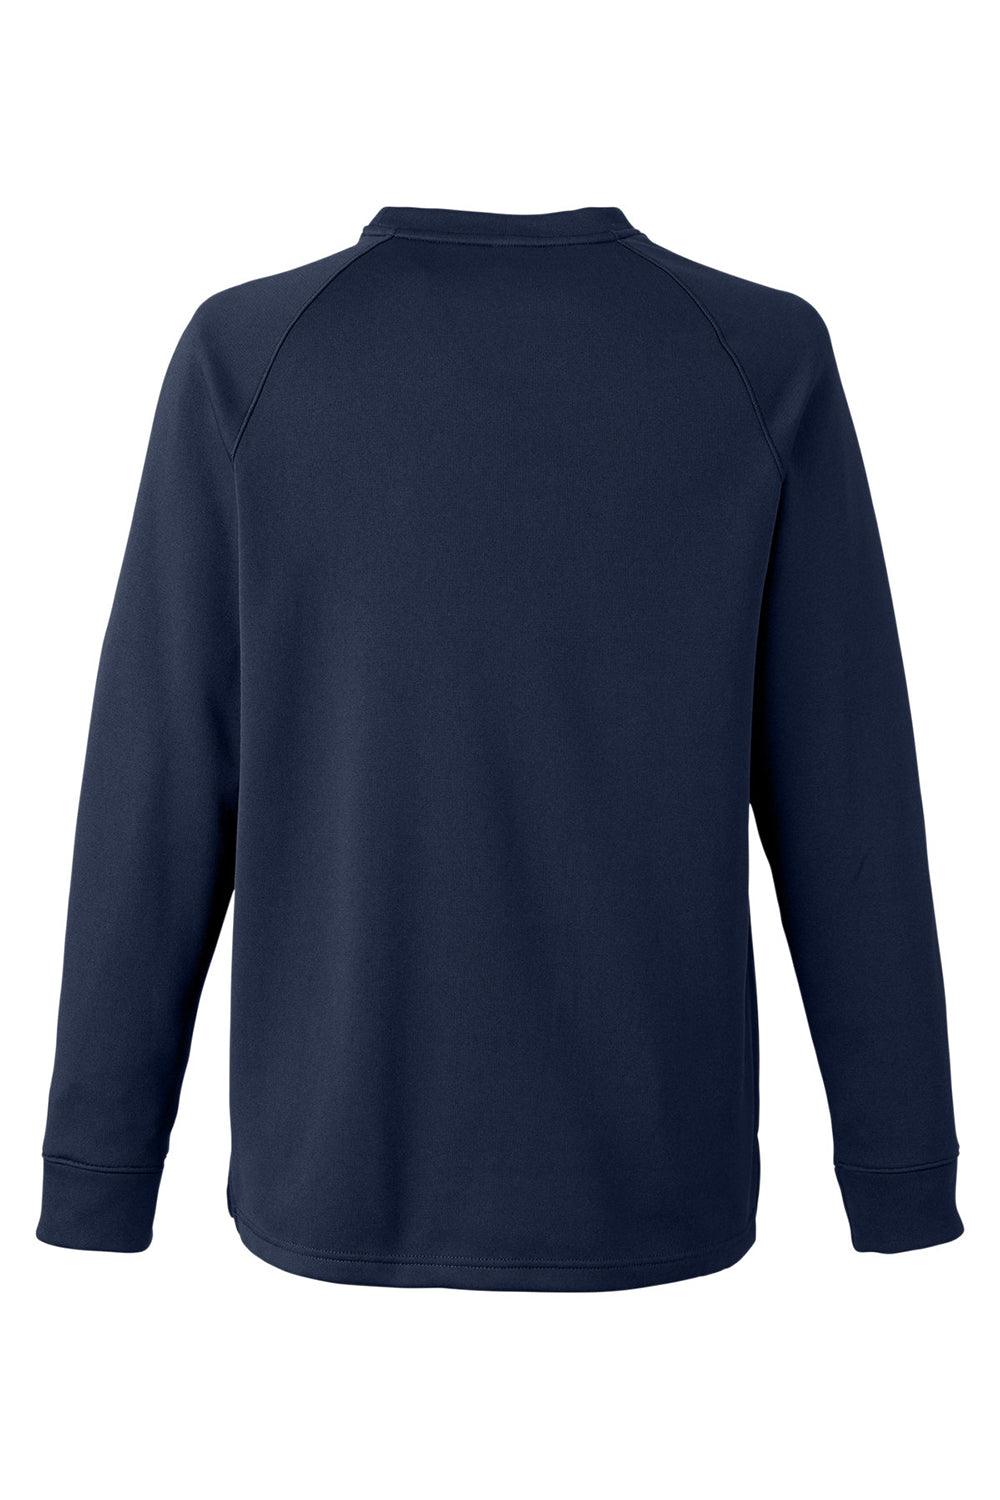 Core 365 CE800 Mens Fusion ChromaSoft Fleece Crewneck Sweatshirt Classic Navy Blue Flat Back